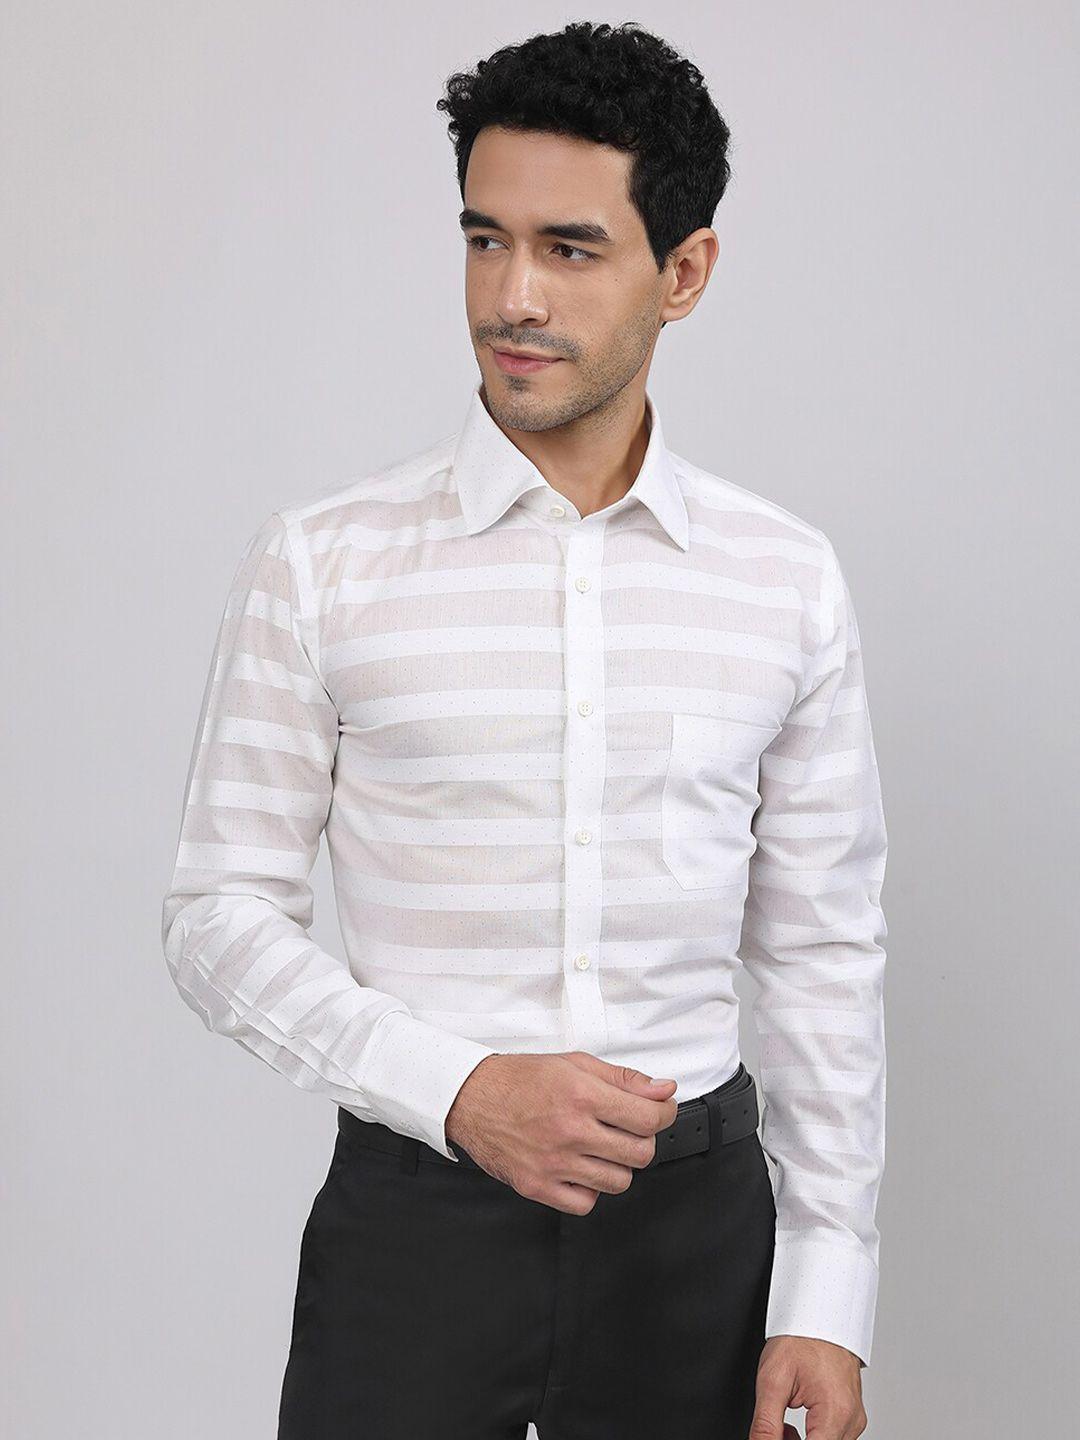 louis stitch men white comfort horizontal stripes opaque striped formal shirt